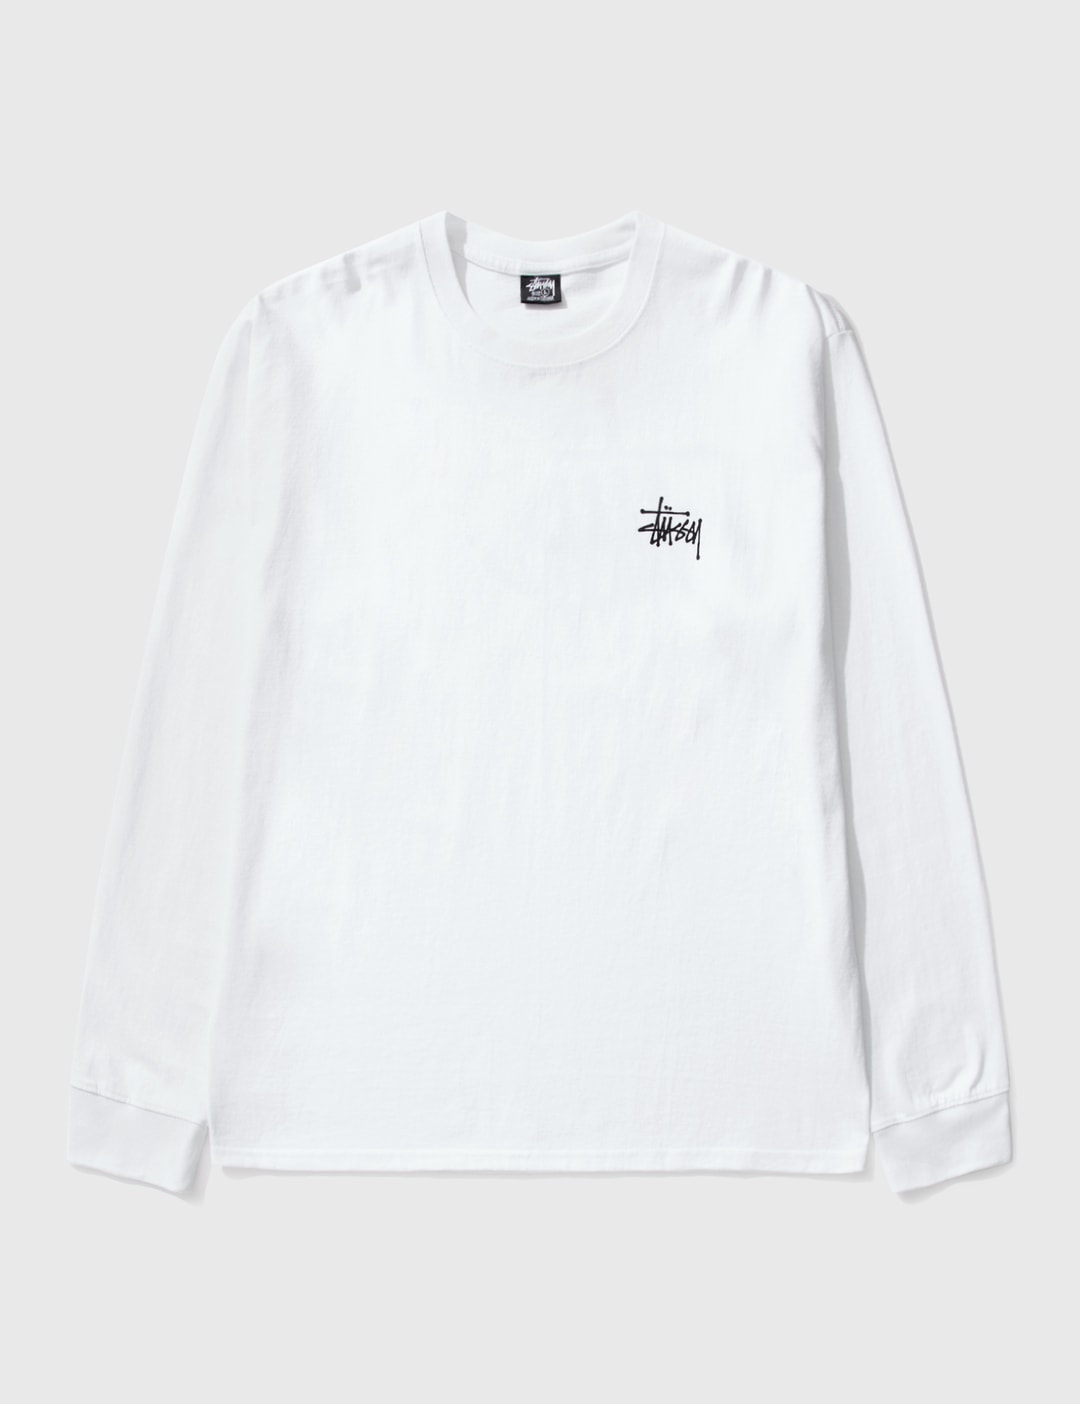 Stüssy - Basic Stussy Long sleeve T-shirt | HBX - Globally Curated ...